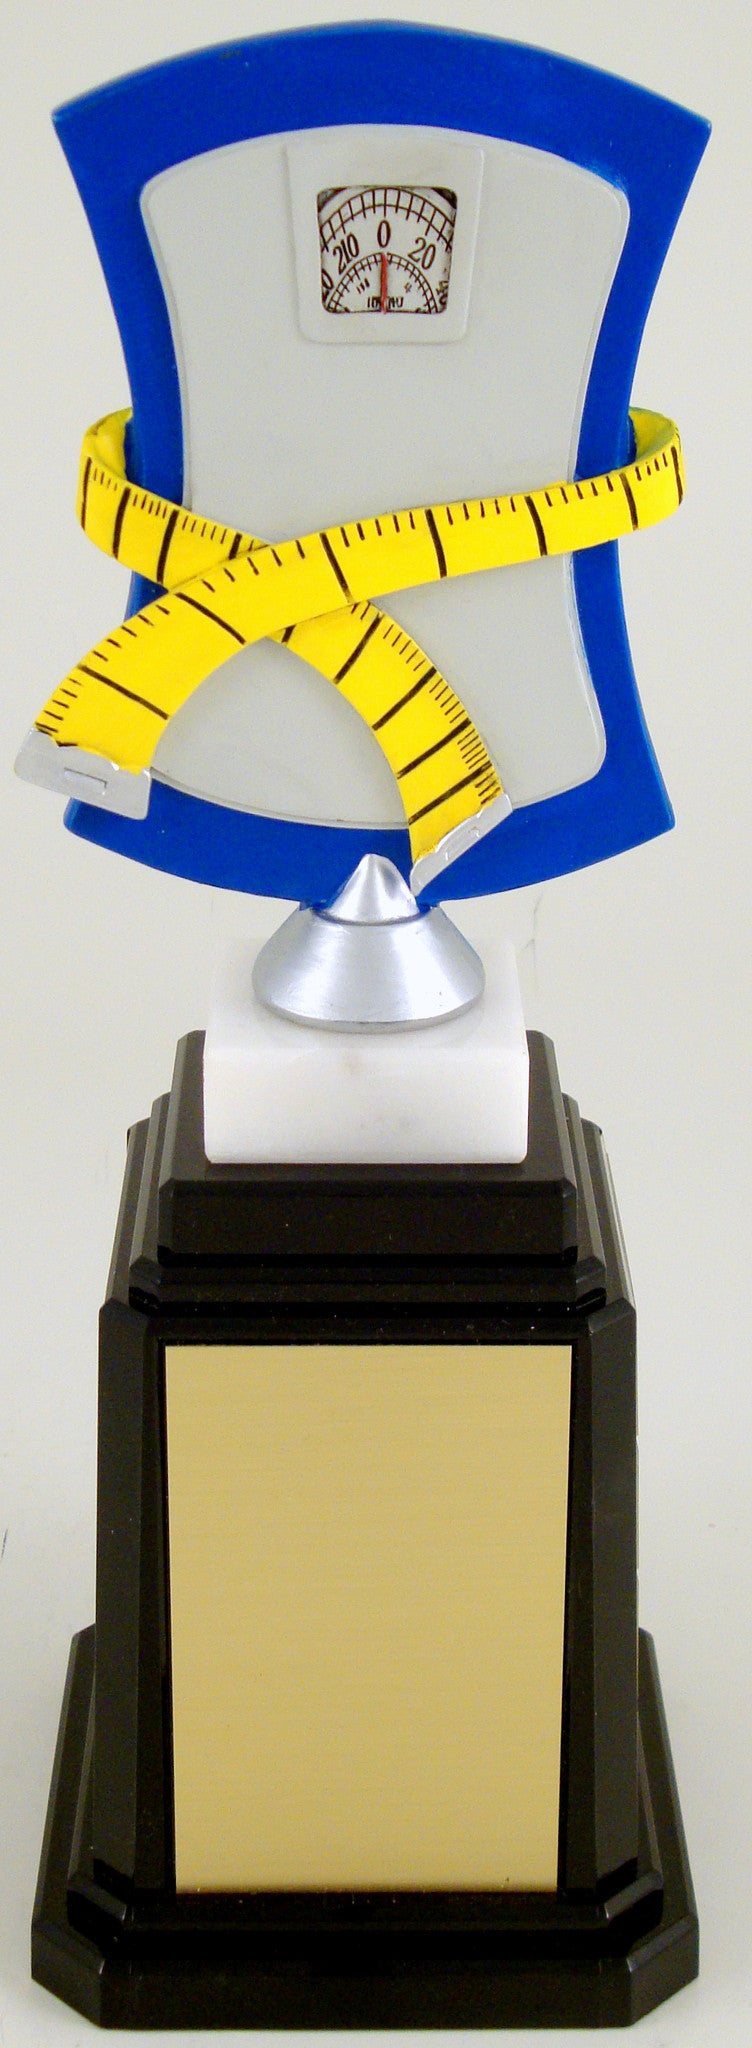 Weight Loss Scale Tower Base Trophy-Trophy-Schoppy&